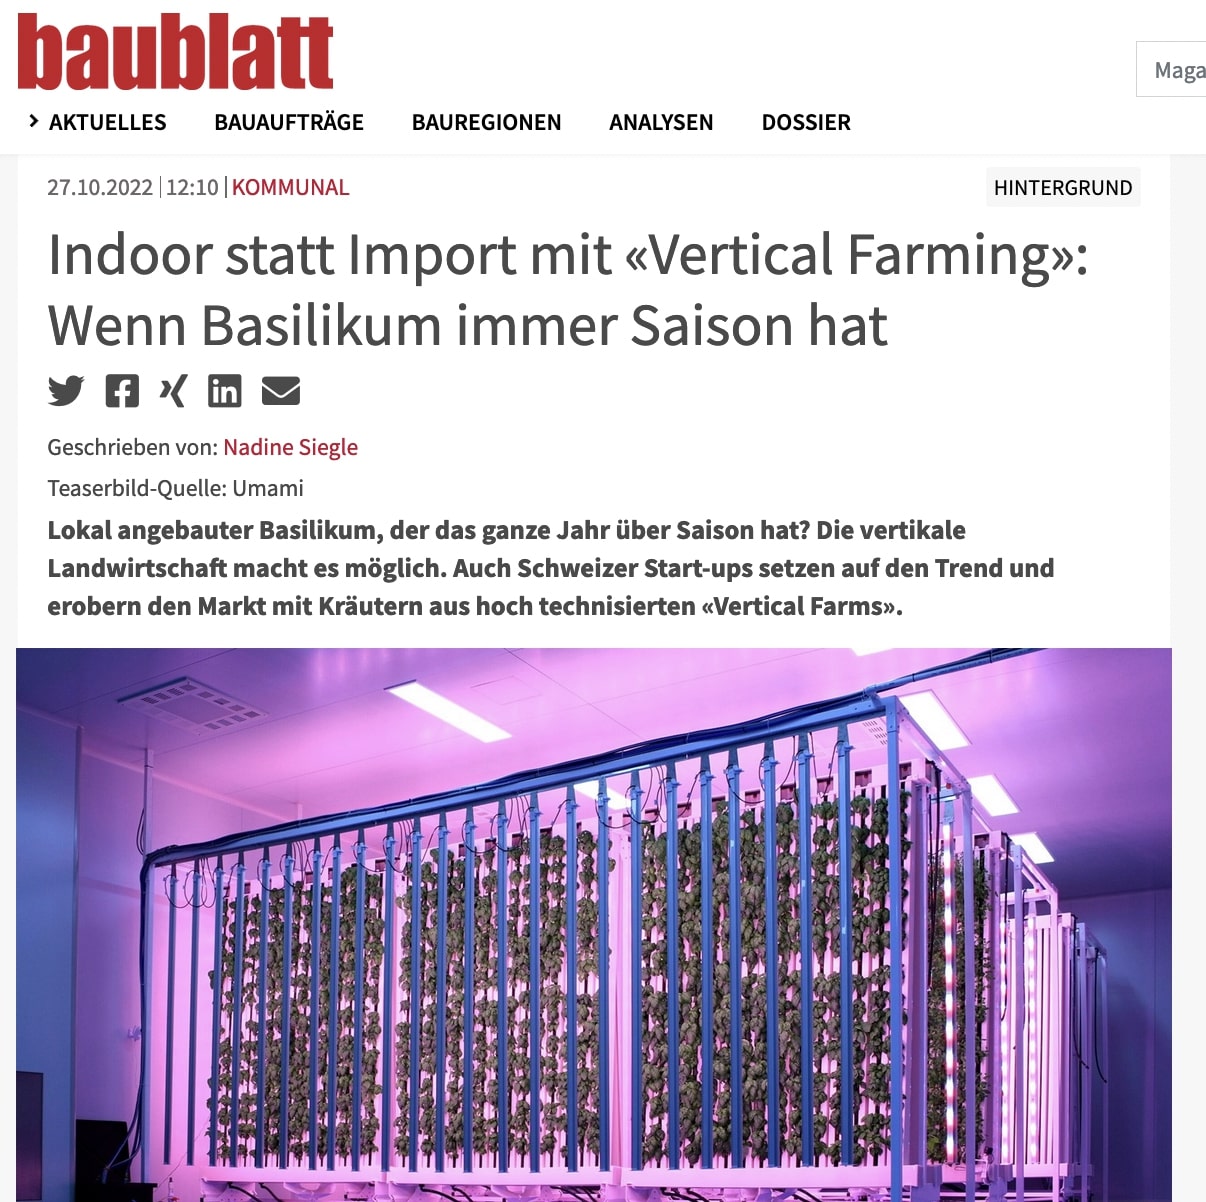 Baublatt magazine article